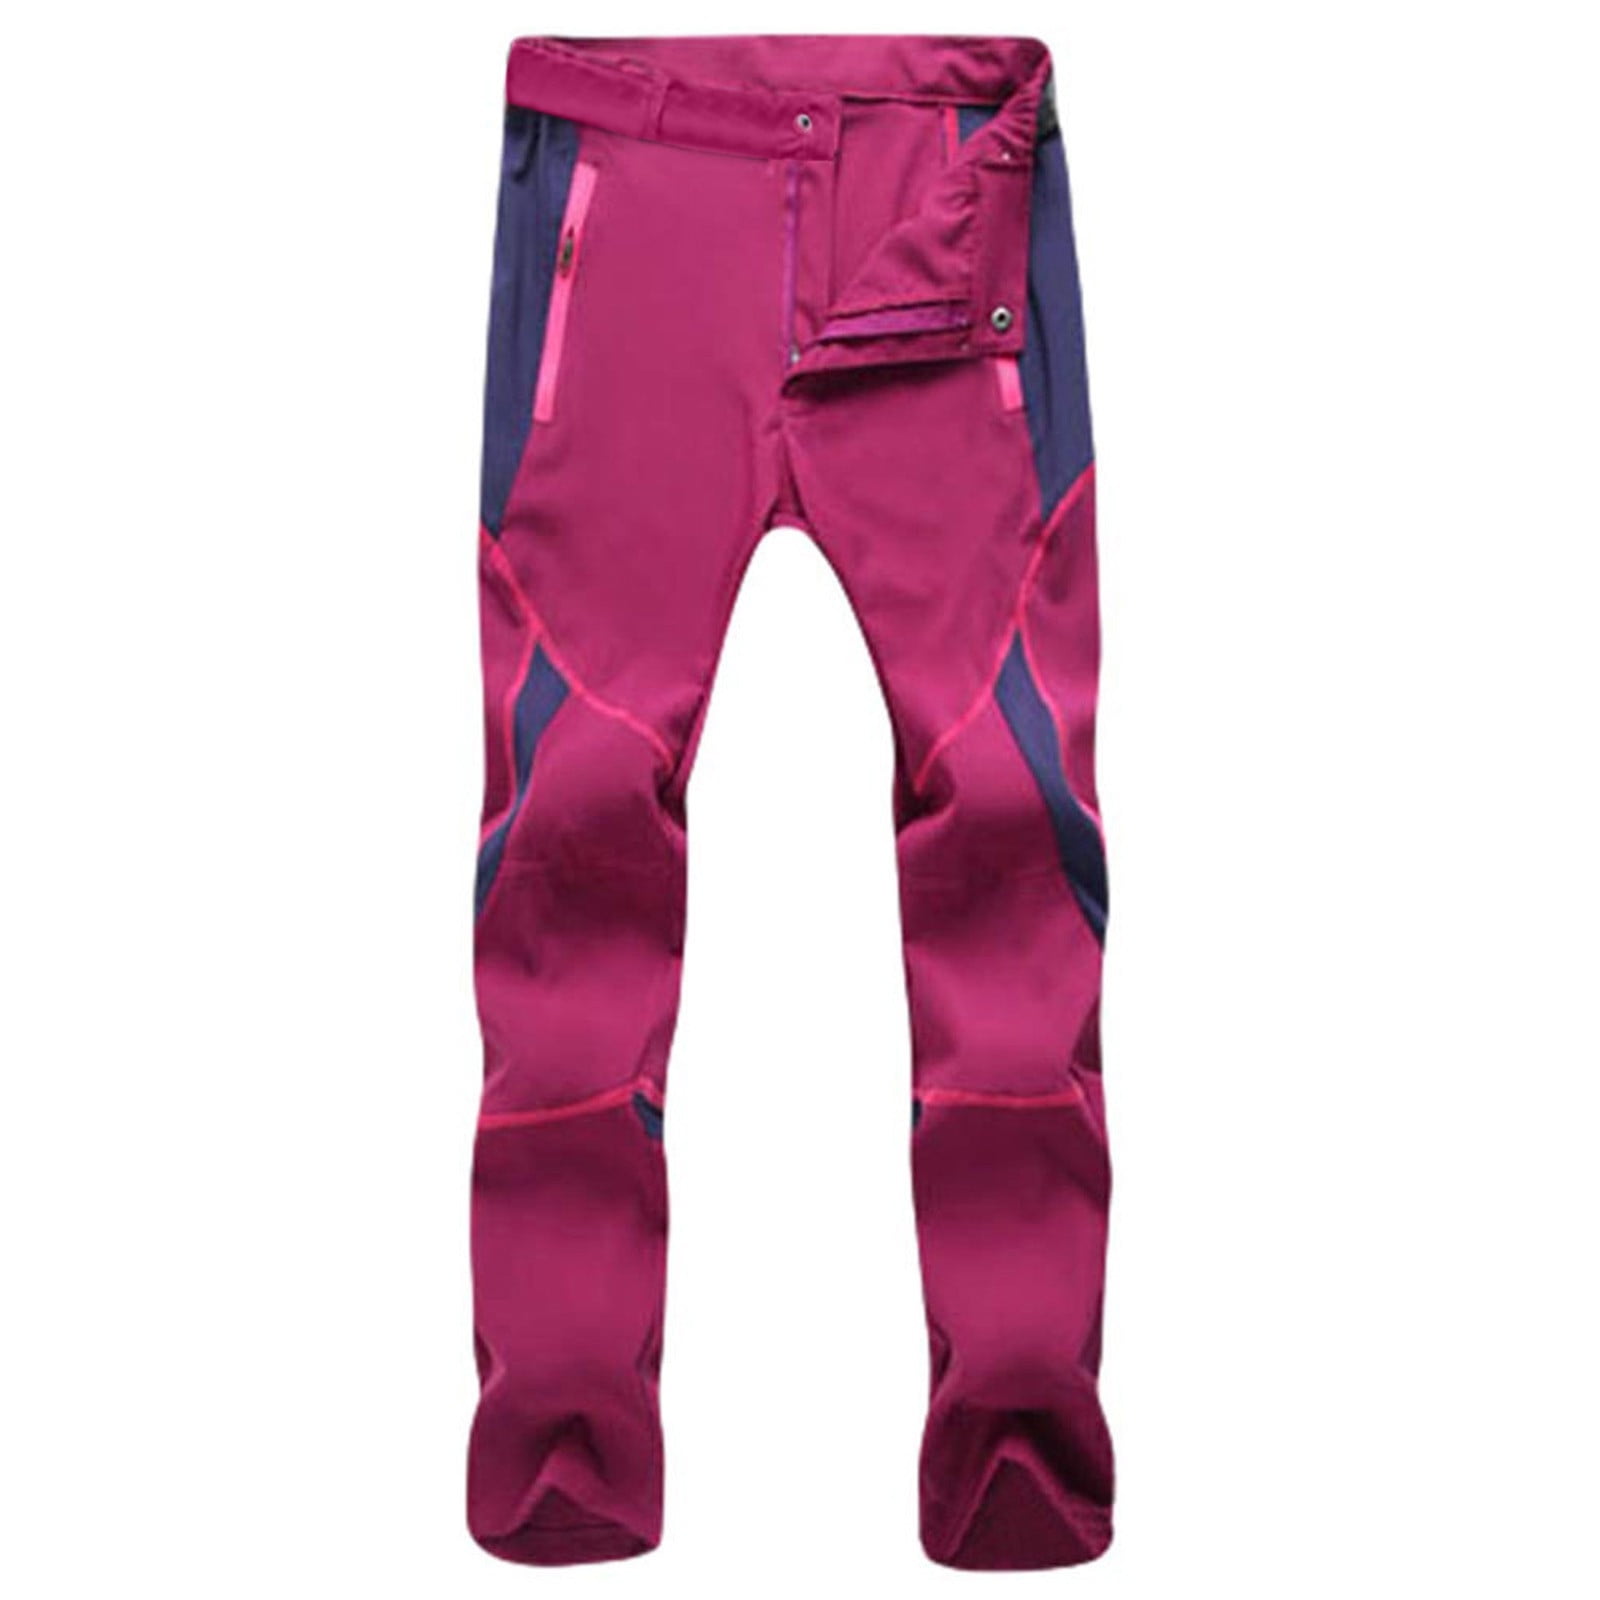 ICHUANYI Women's Hiking Pants Quick-drying Durable Ventilated Pants Outdoor  Activities Windproof Waterproof Pants 